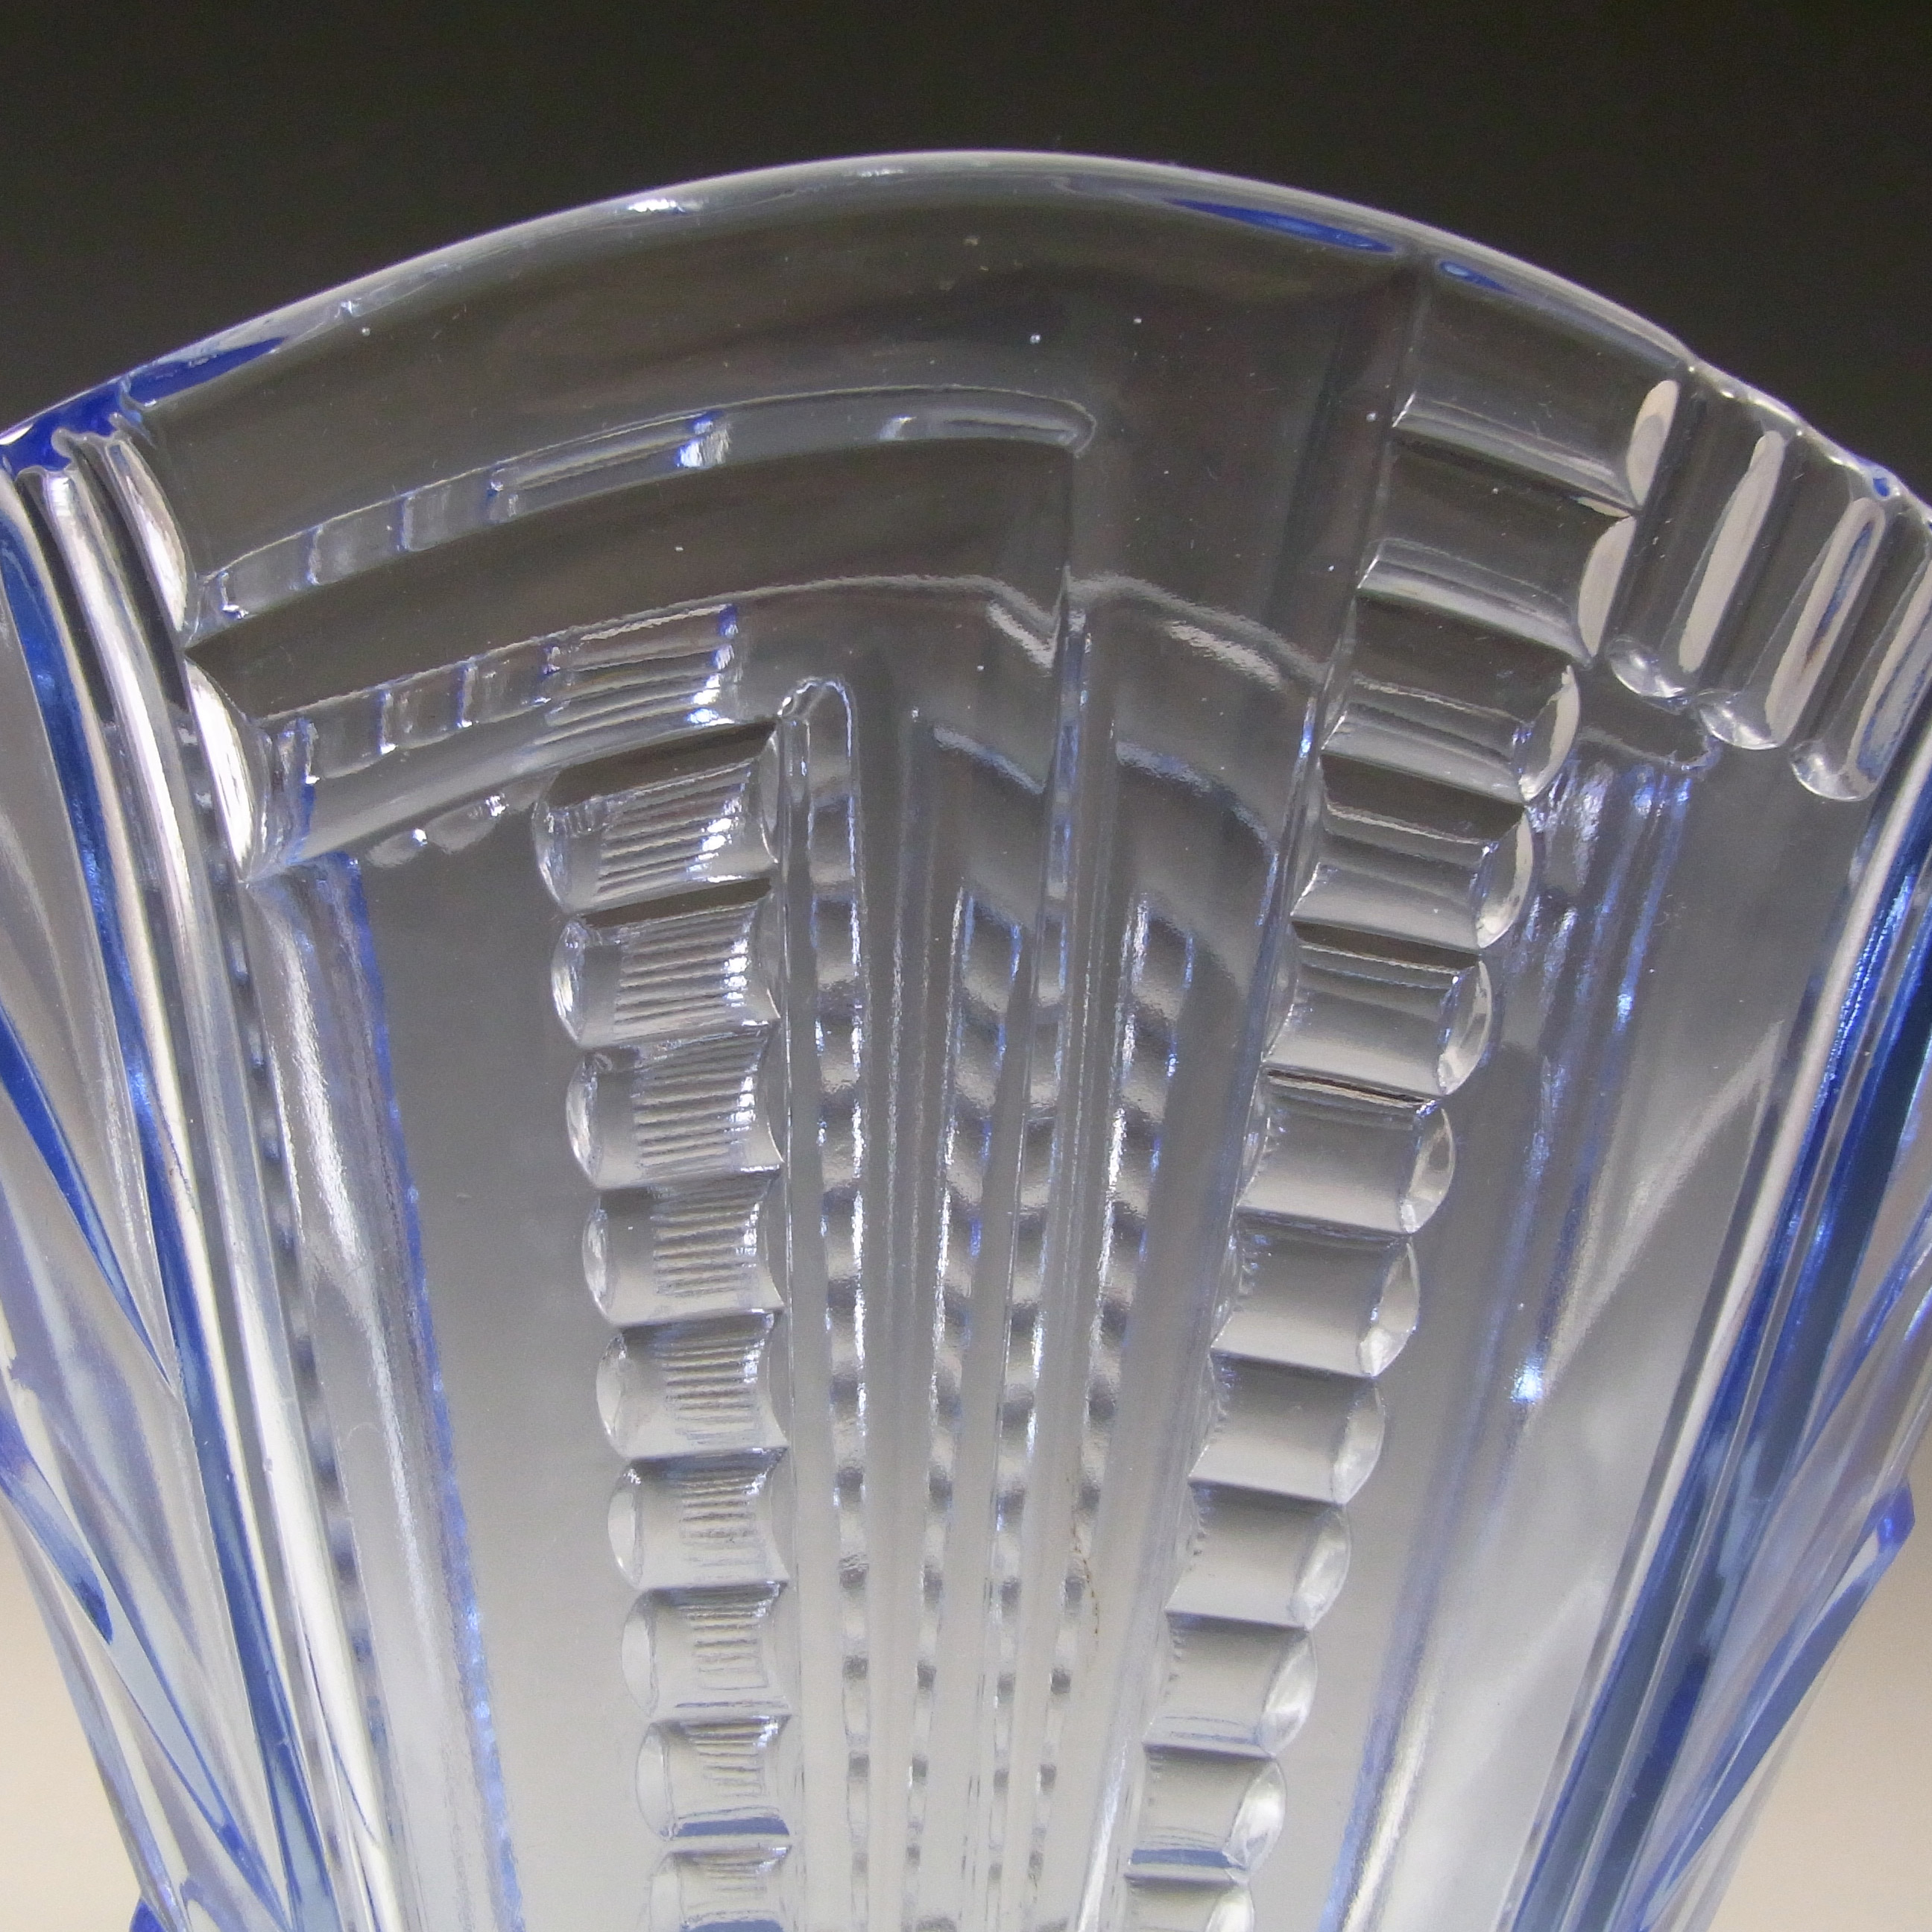 Brockwitz Art Deco 1930s Blue Glass Vase #9070 - Click Image to Close